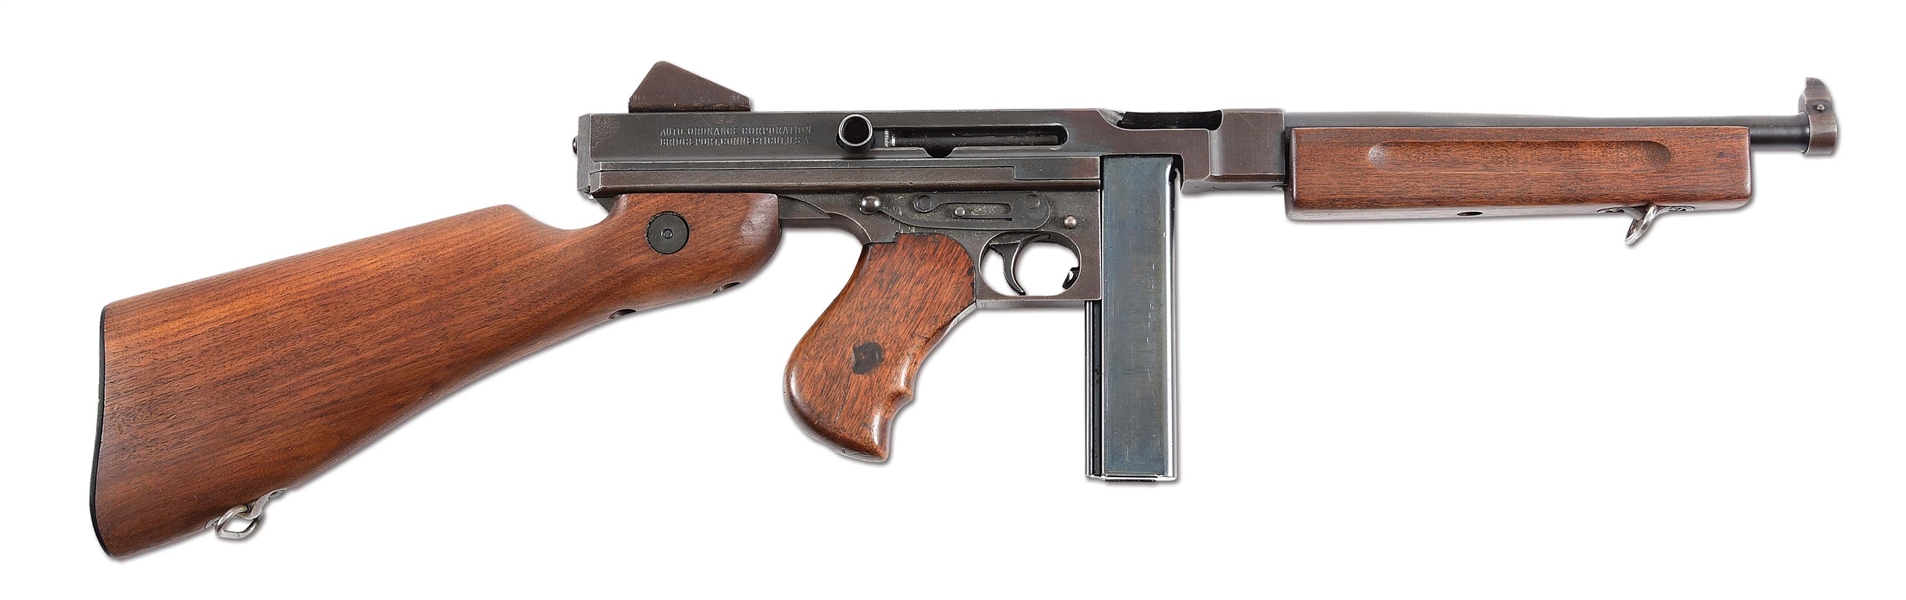 (N) WORLD WAR II AUTO ORDNANCE THOMPSON M1A1 MACHINE GUN (FULLY TRANSFERABLE).